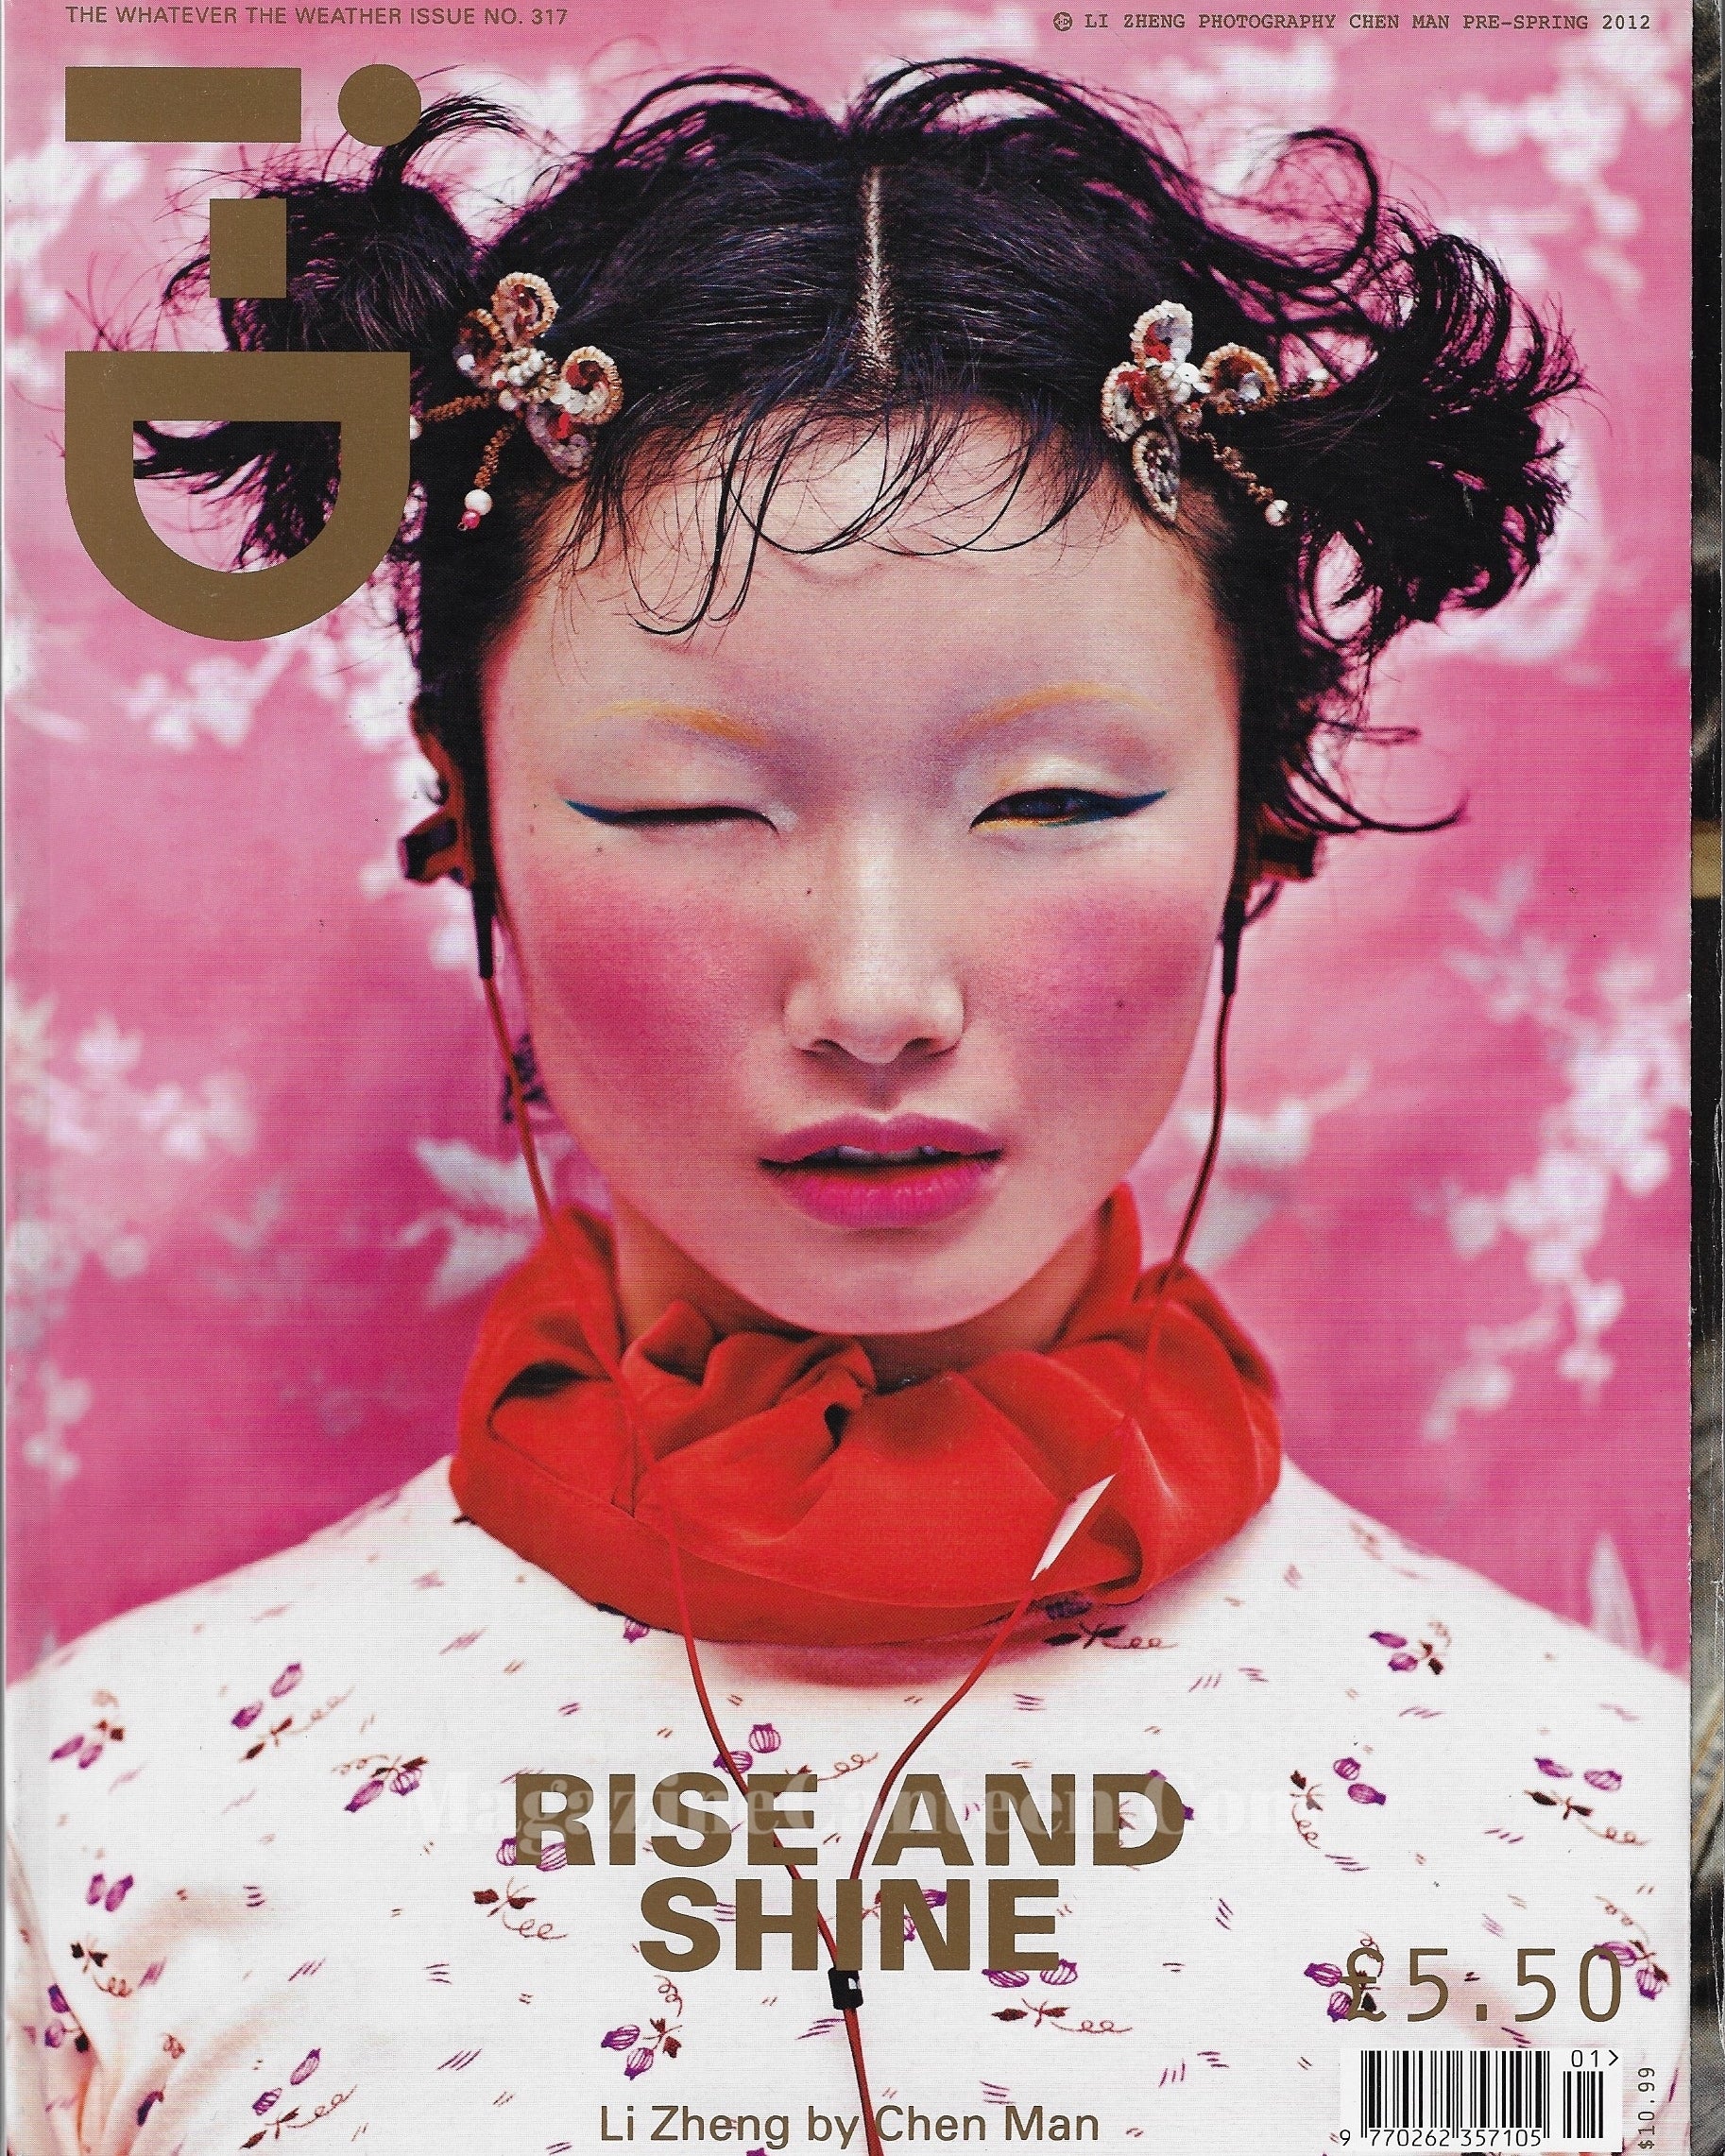 I-D Magazine 317 - Li Zheng 2012